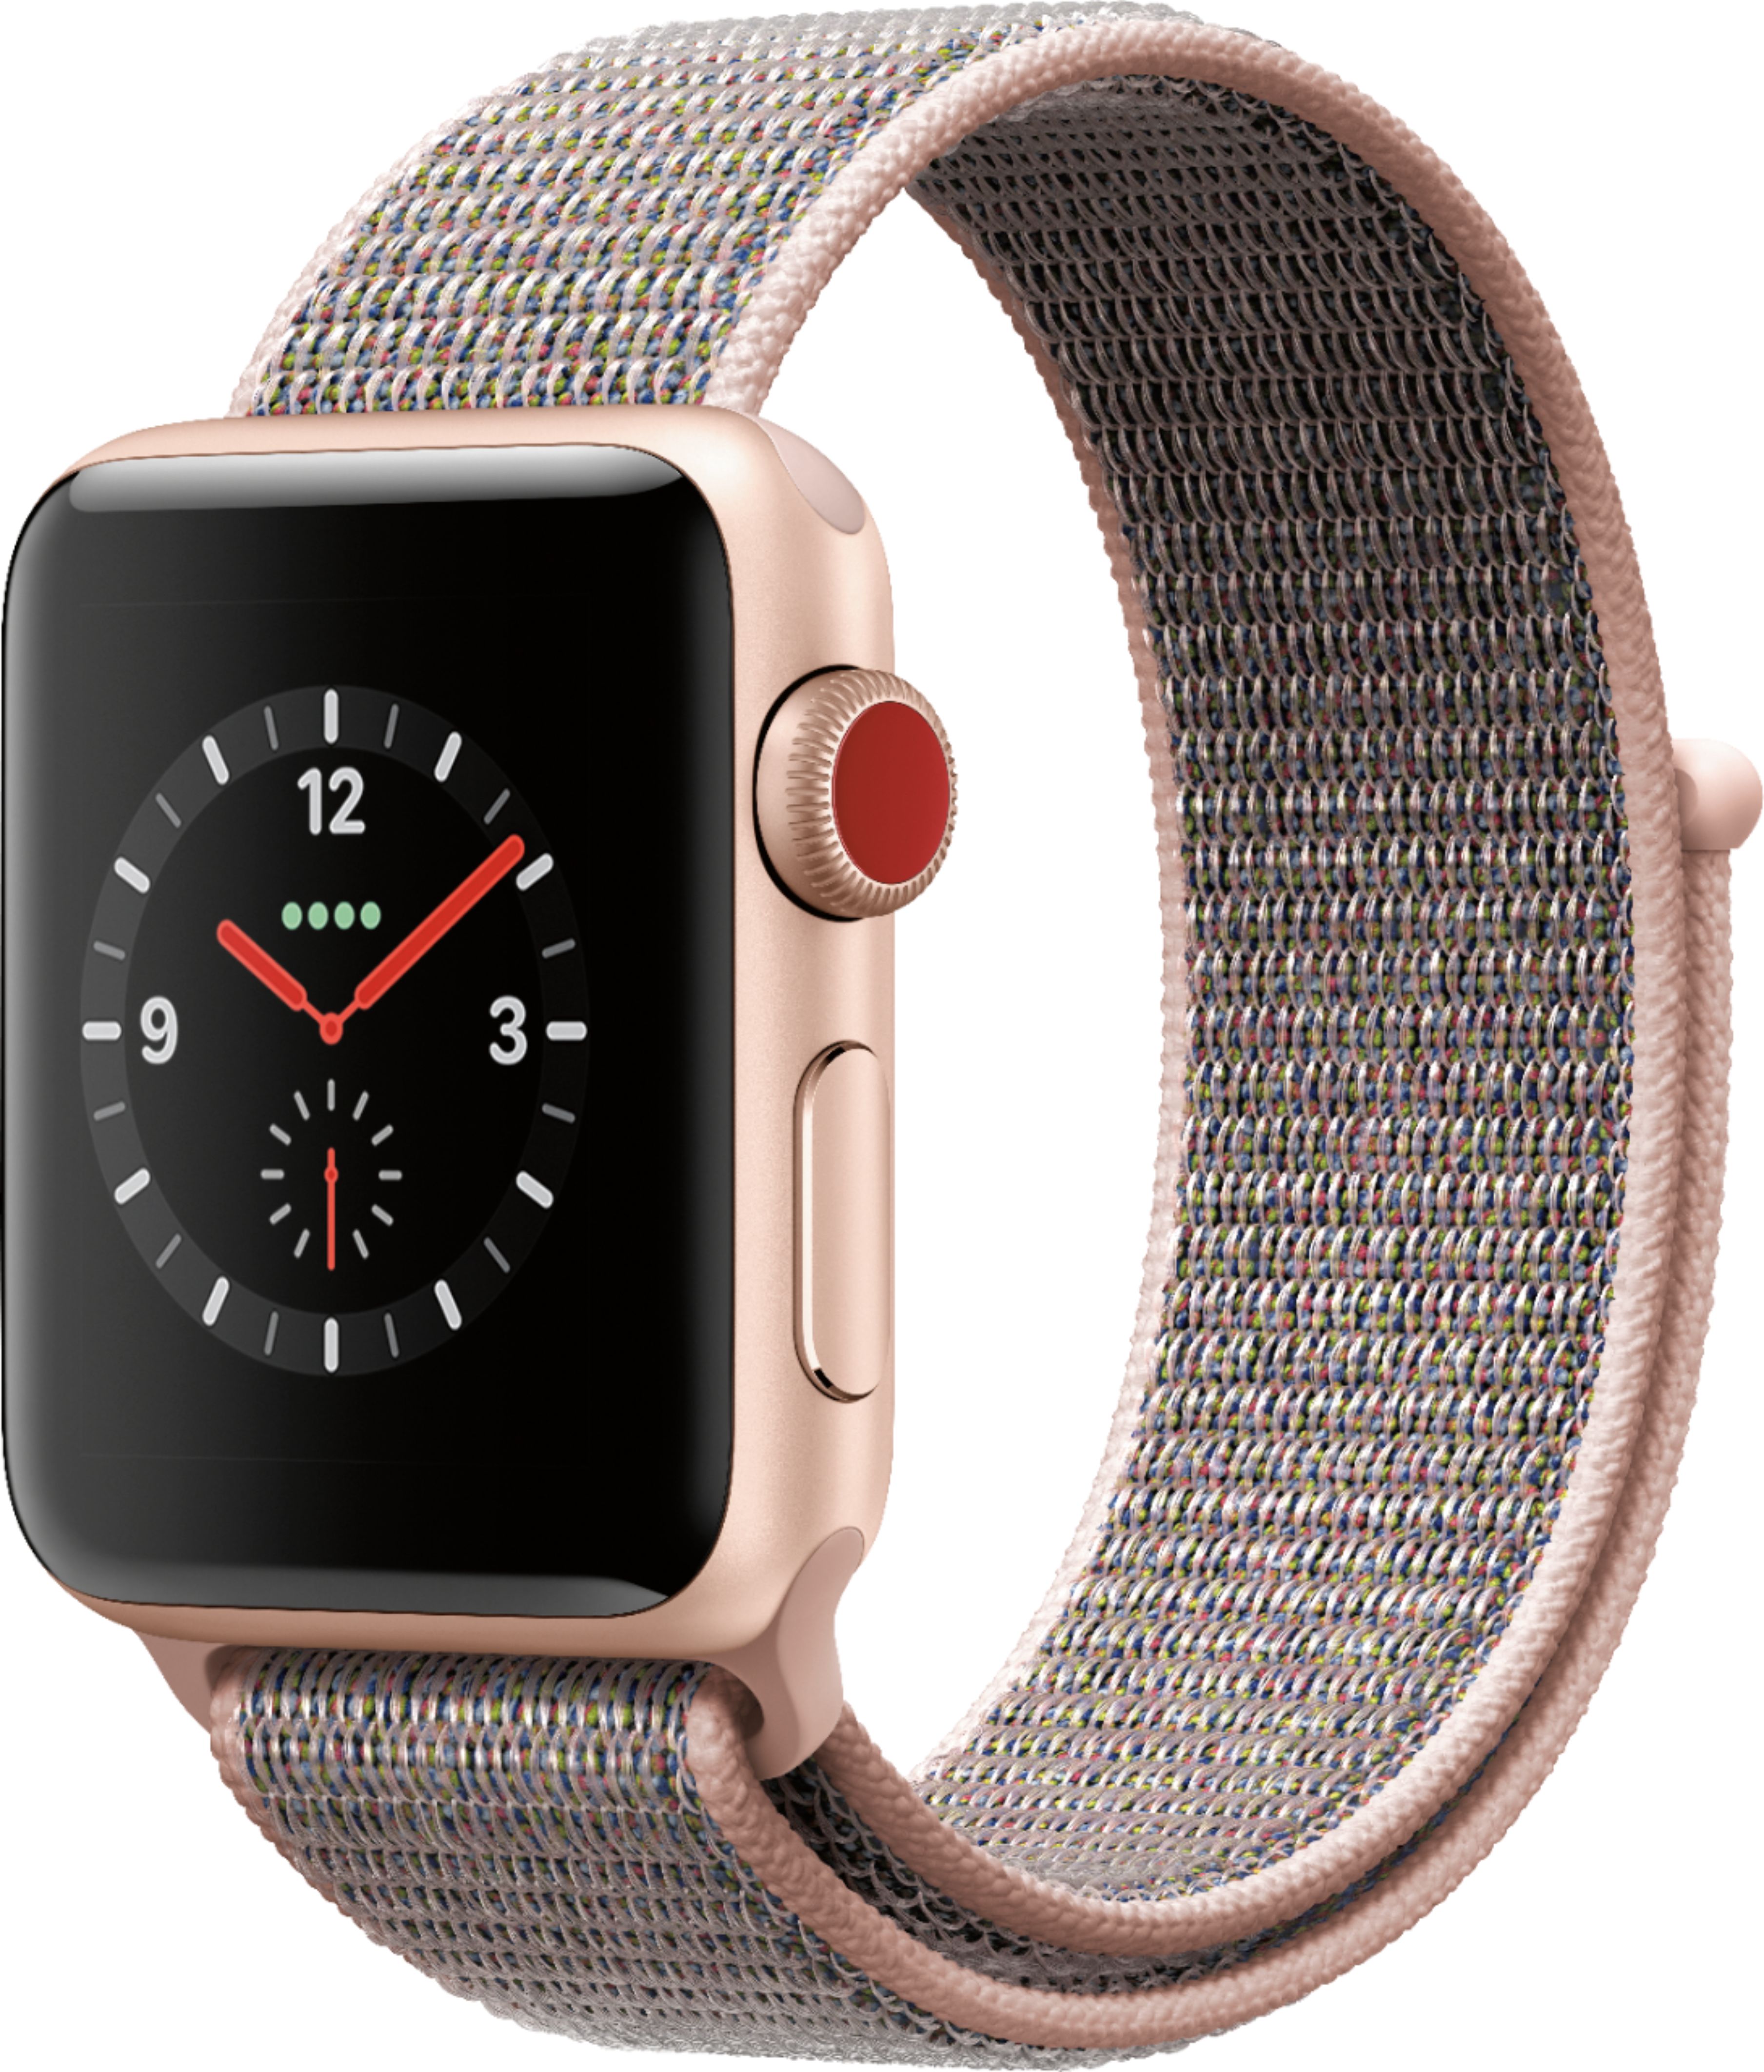 apple watch series 3 gold pink sand